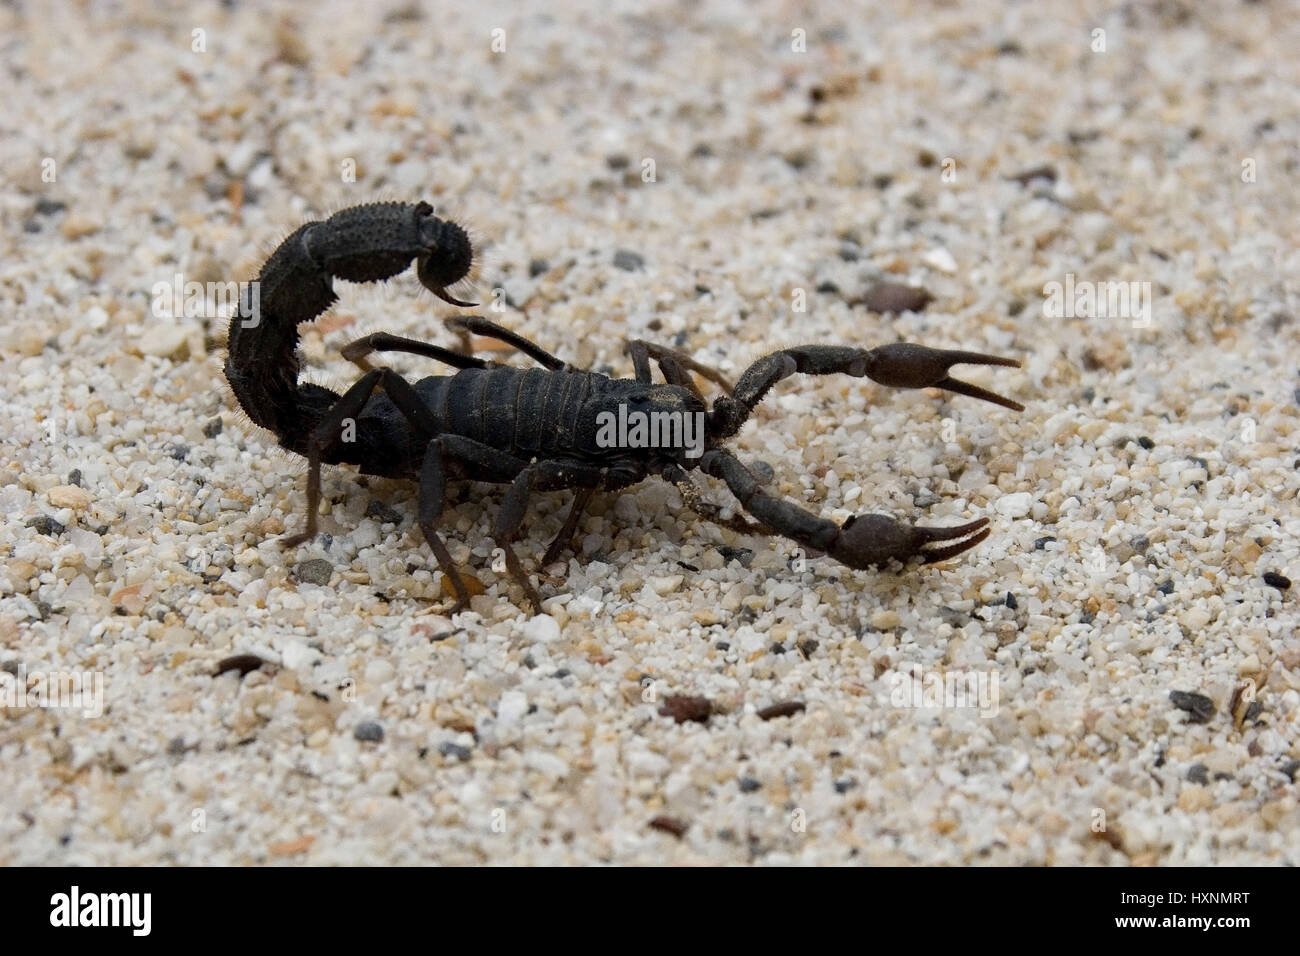 Hairy Dick's tail, P. villosus, Haariger Dickschwanz | P. villosus  ein giftiger Skorpion  Namibia Stock Photo